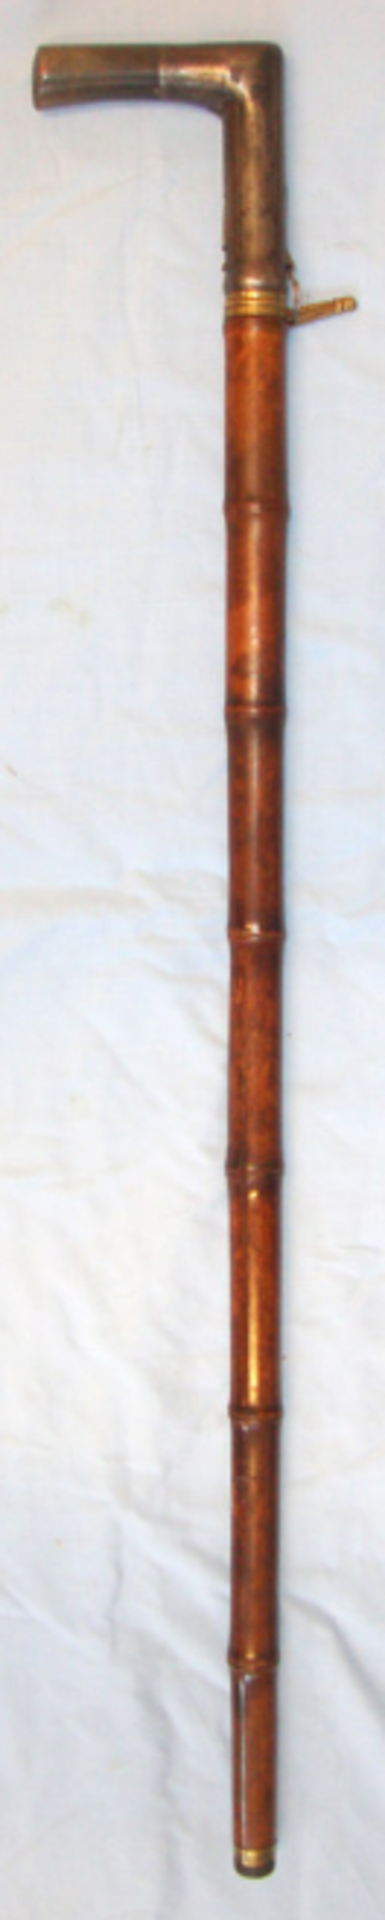 RARE, C1870 French Victorian Gentleman’s 16 Bore Breech Loading Pinfire Walking Stick Shotgun - Image 3 of 3